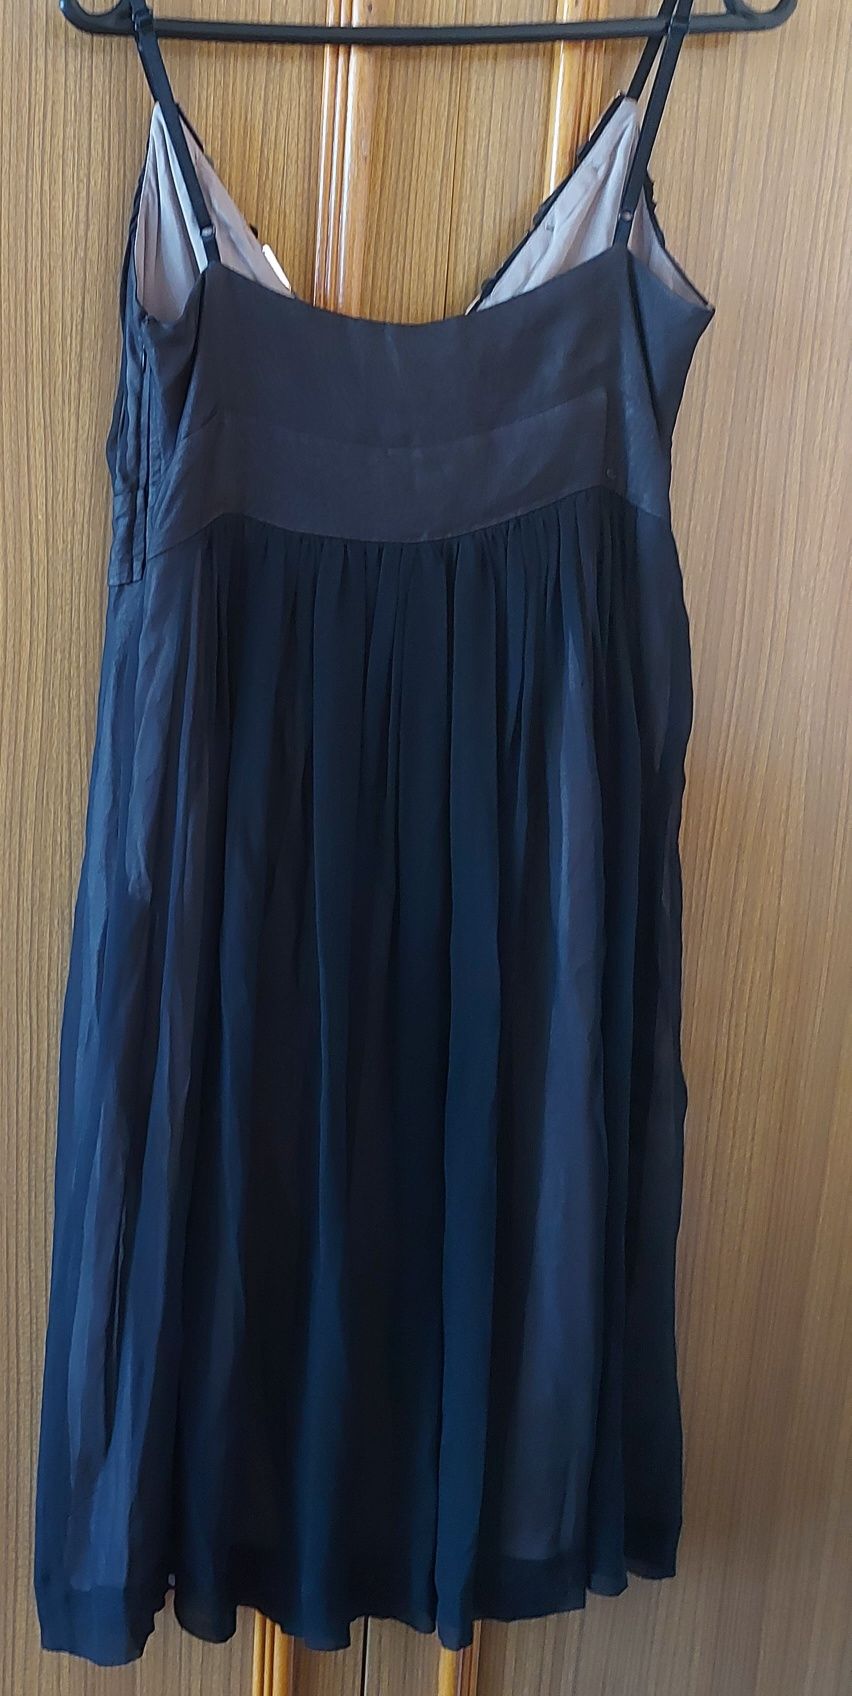 Tiulową, czarna sukienka